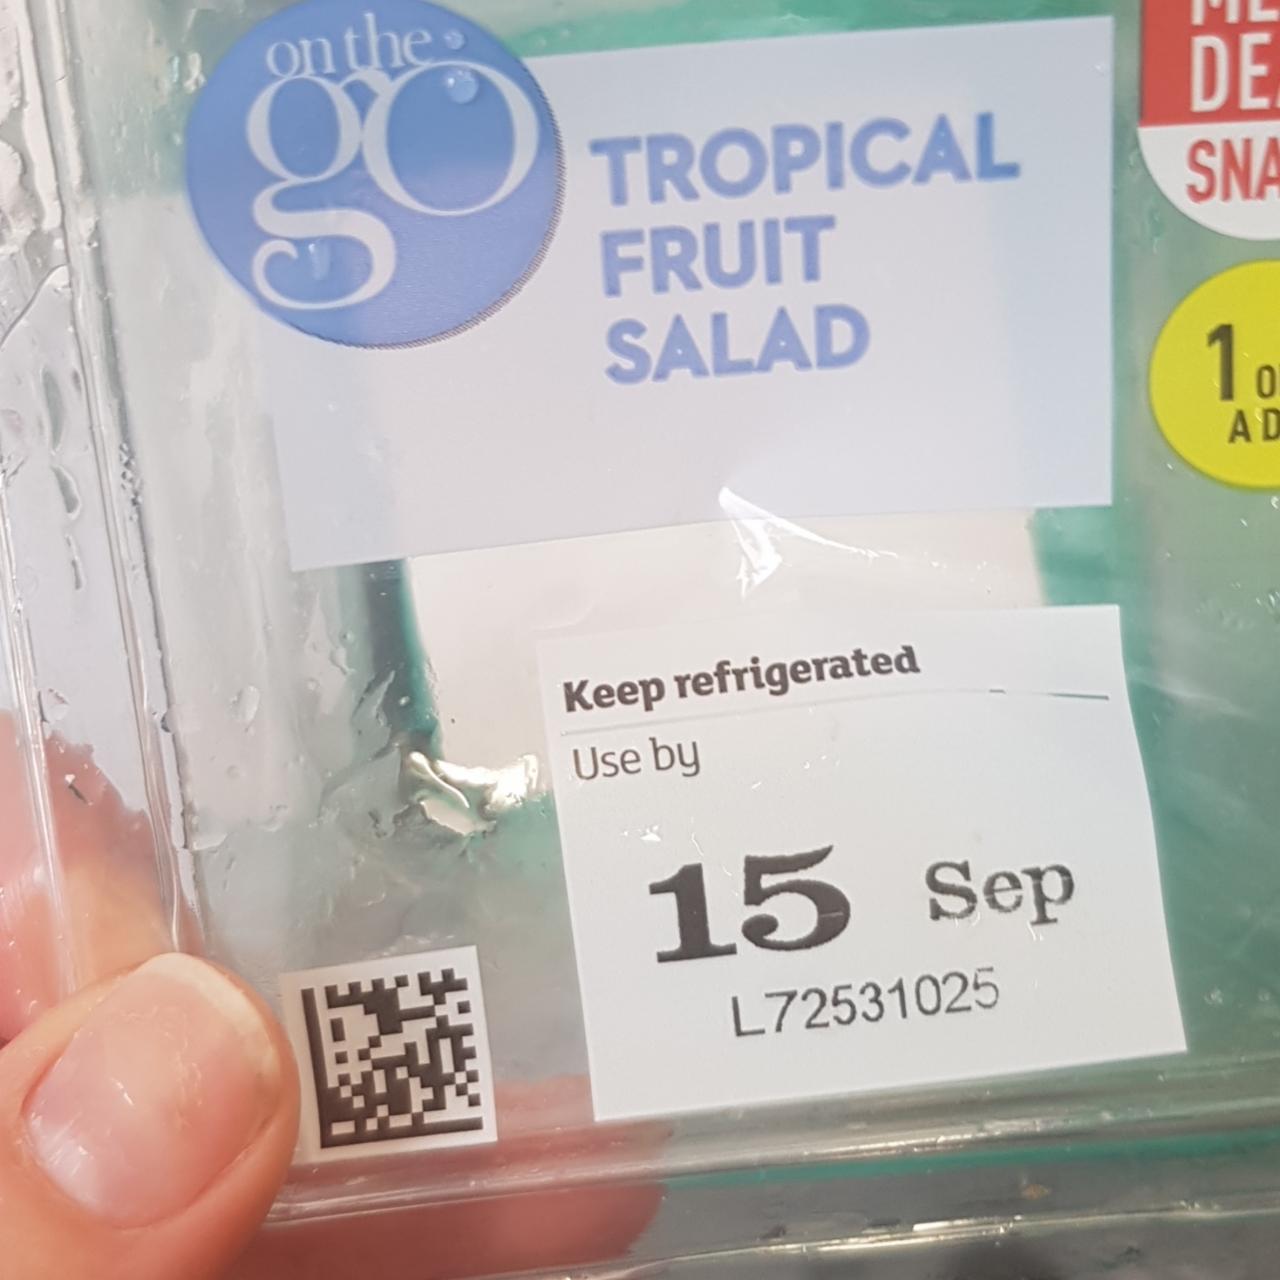 Fotografie - On the Go Tropical Fruit Salad Sainsbury's